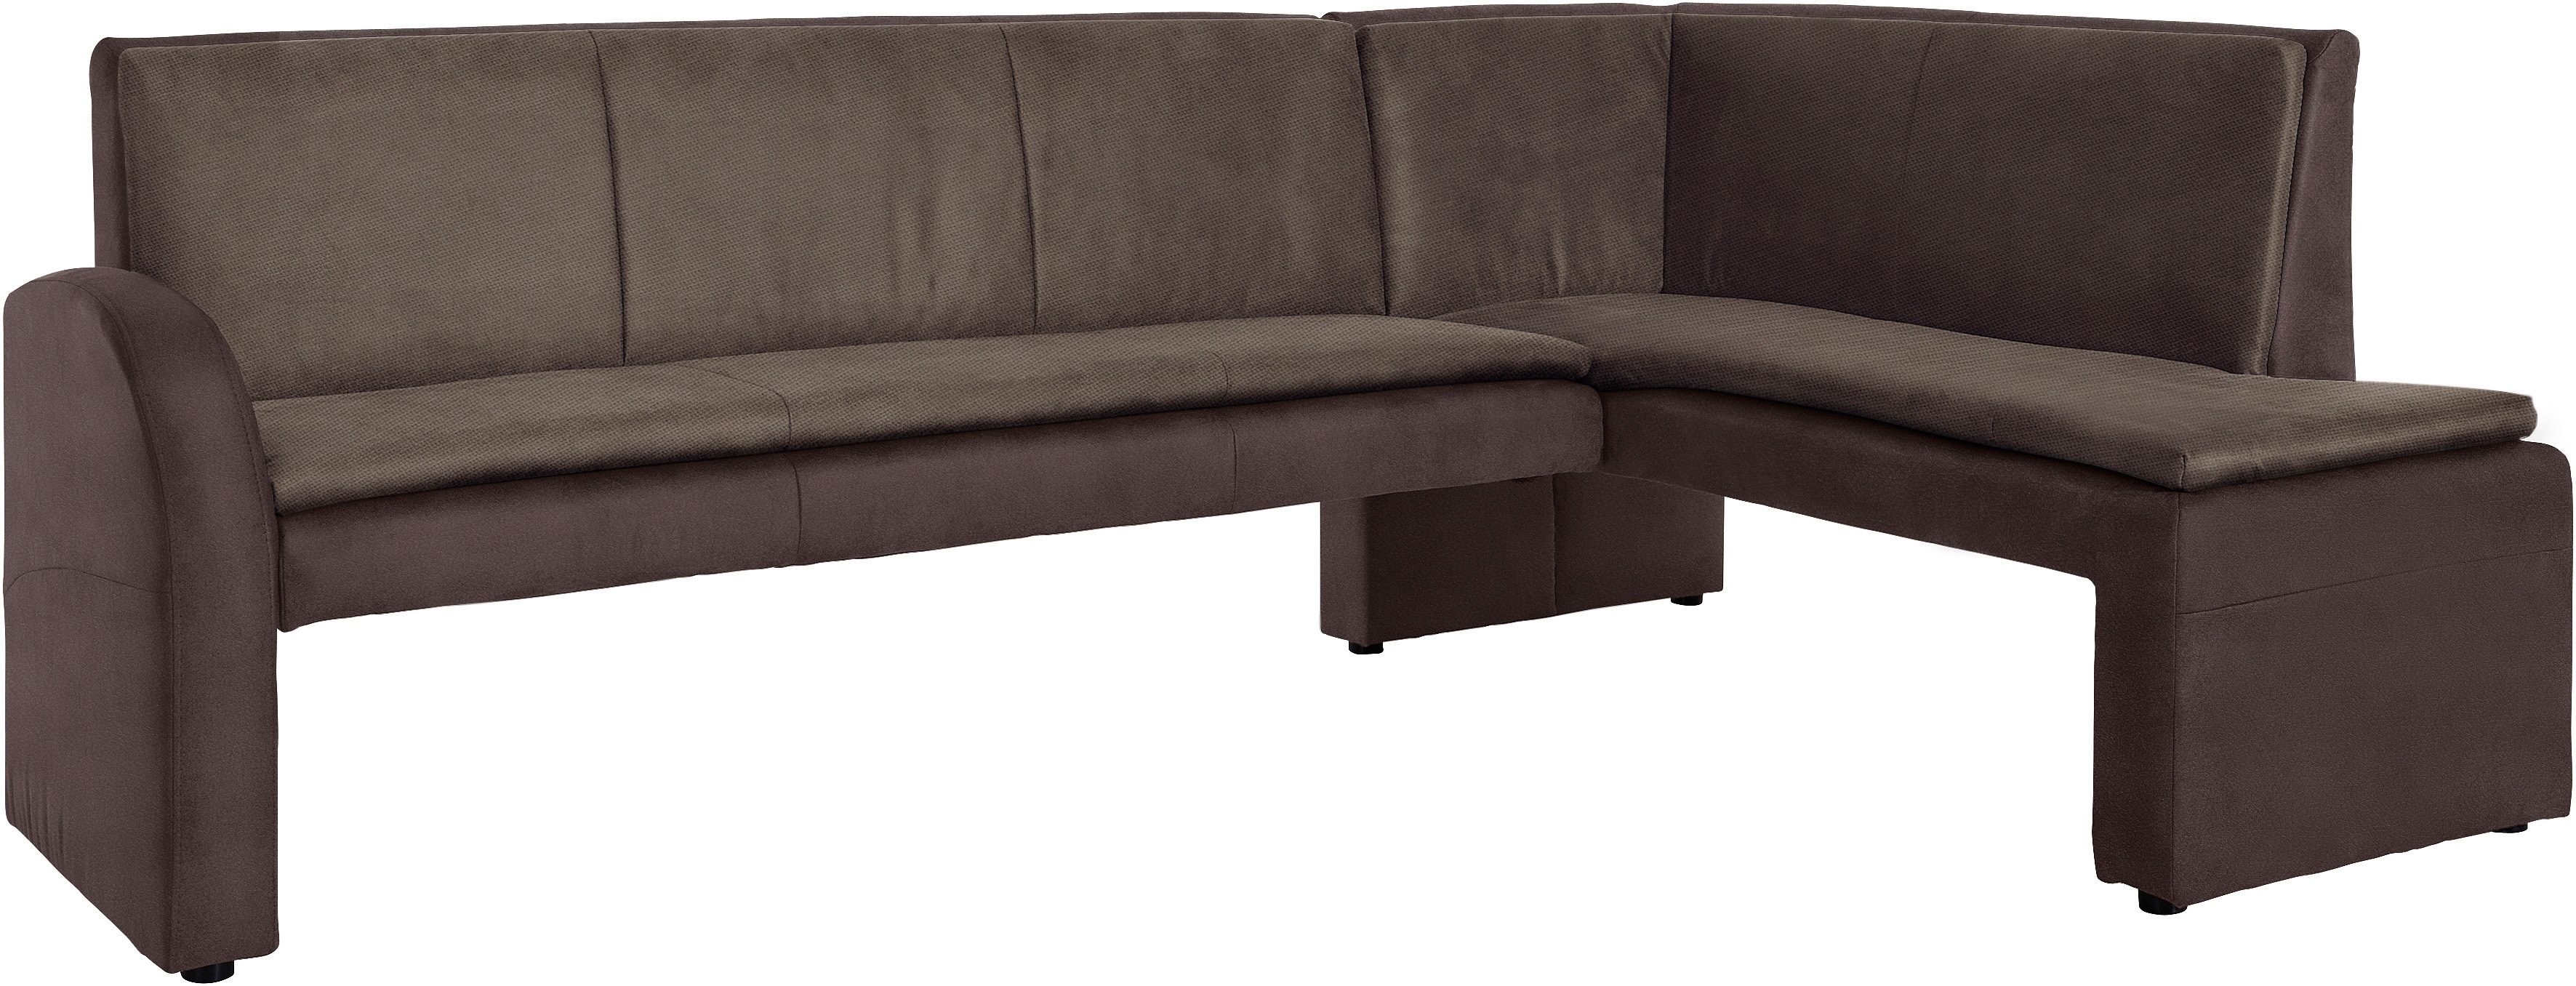 exxpo - sofa fashion hoekbank cortado vrij verstelbaar in de kamer bruin